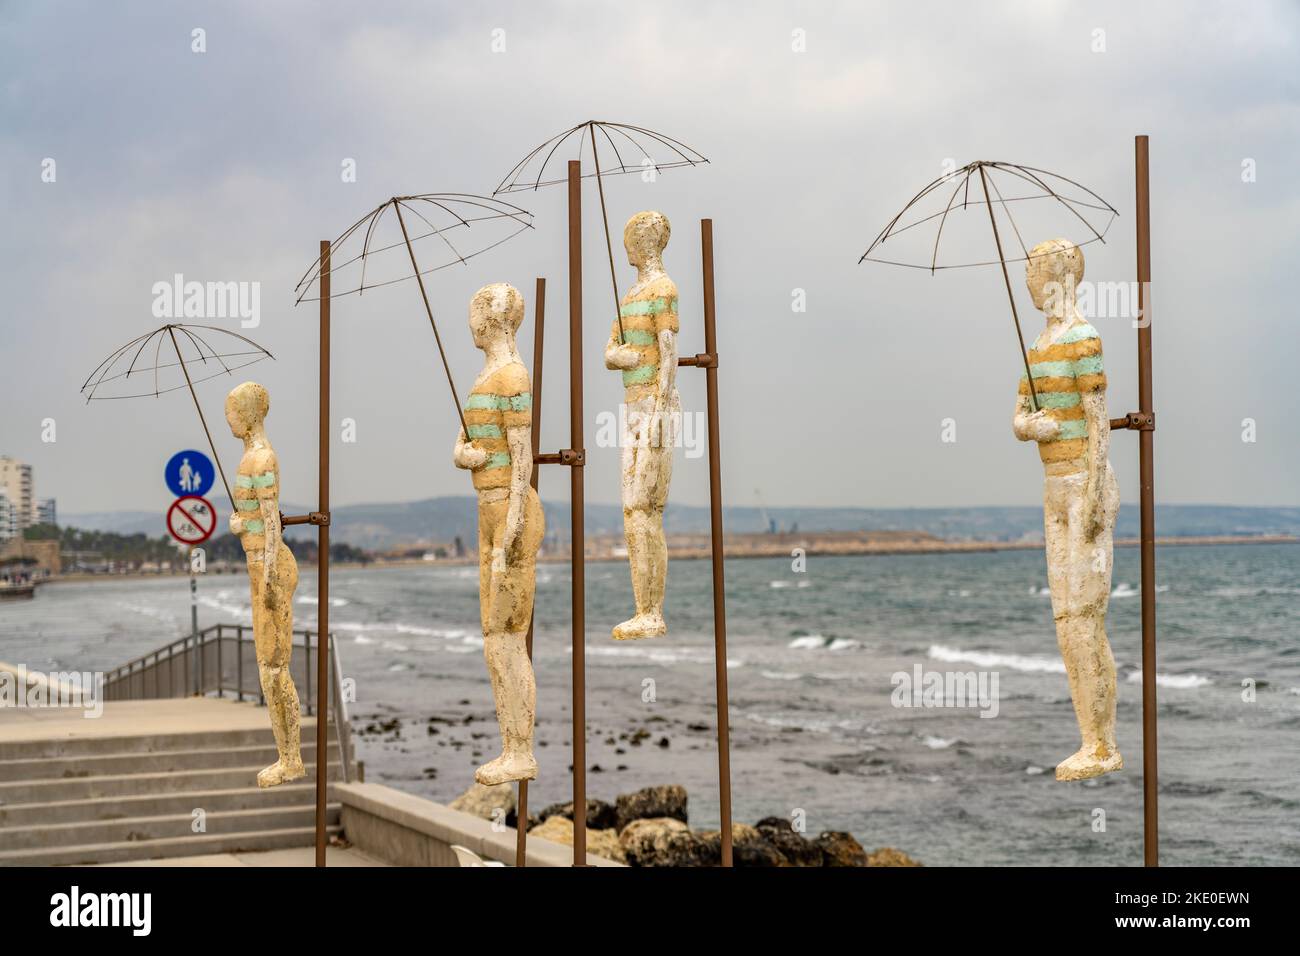 Skulptur mit Regenschirmen an der Uferpromenade in Larnaka, Zypern, Europa  |  Sculpture with umbrellas at the waterfront promenade in Larnaca, Cyprus Stock Photo